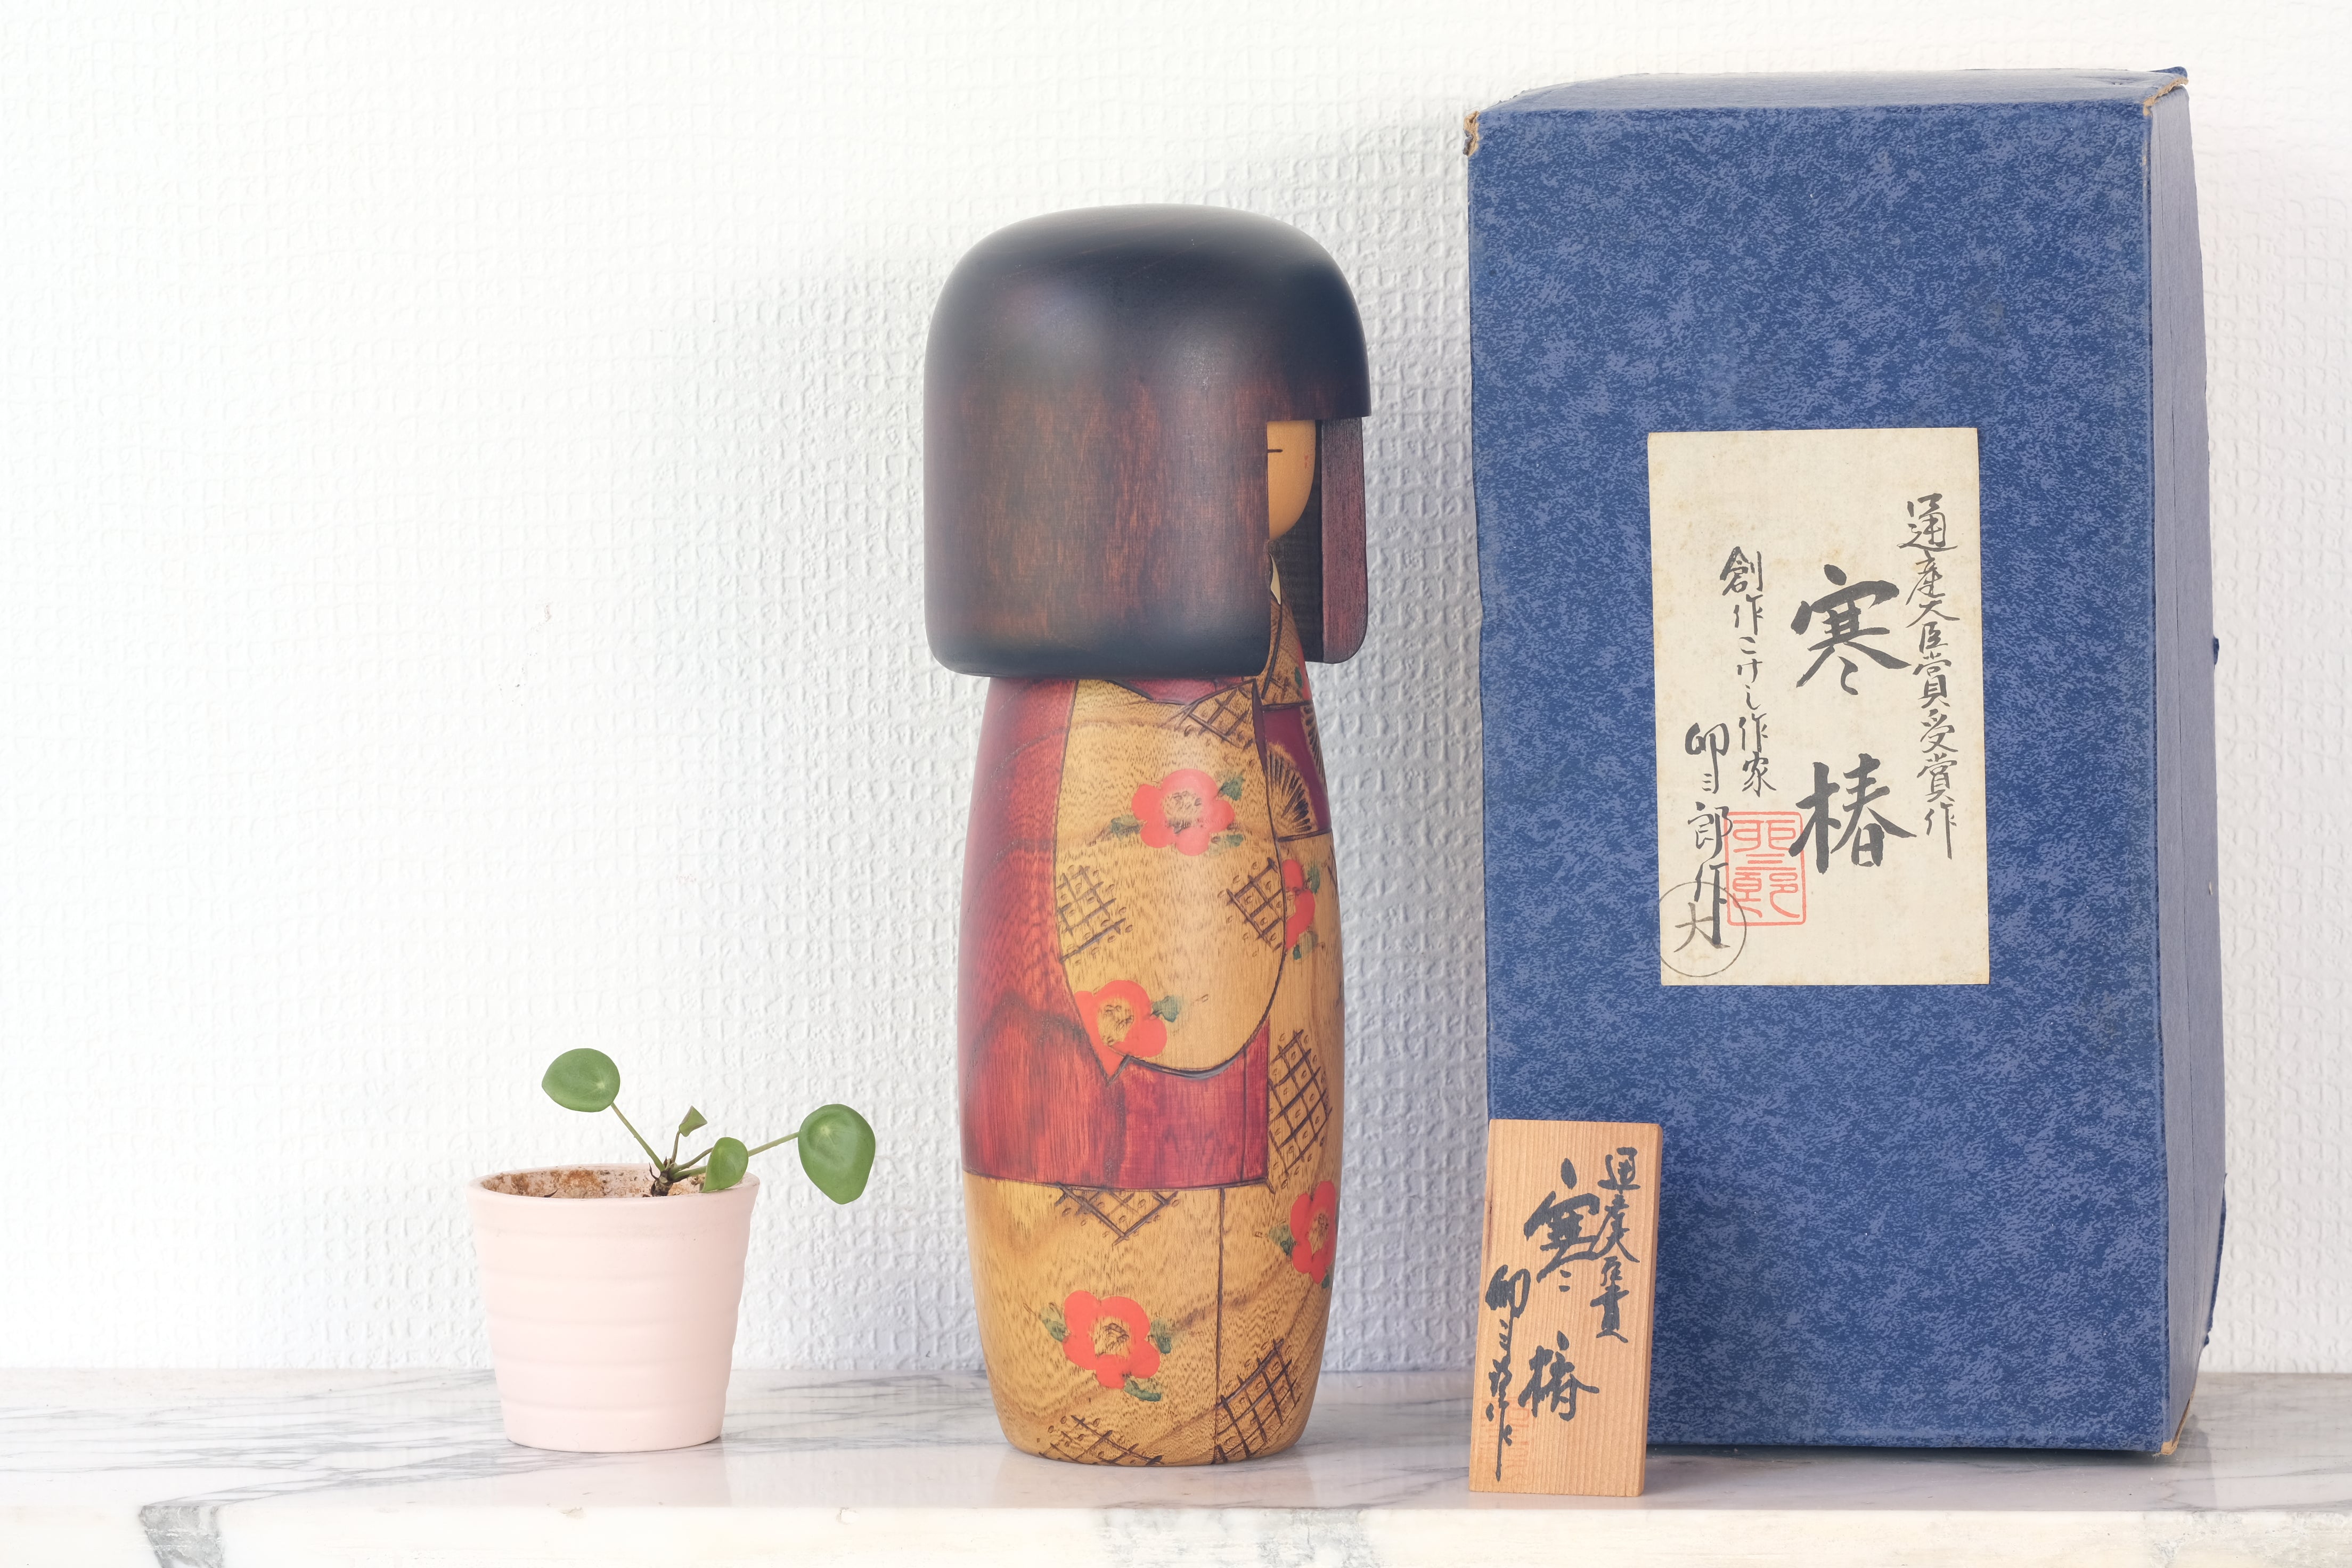 Gumma Kokeshi by Usaburo | Titled: 'Kantsubaki' | With Original Box | 28 cm